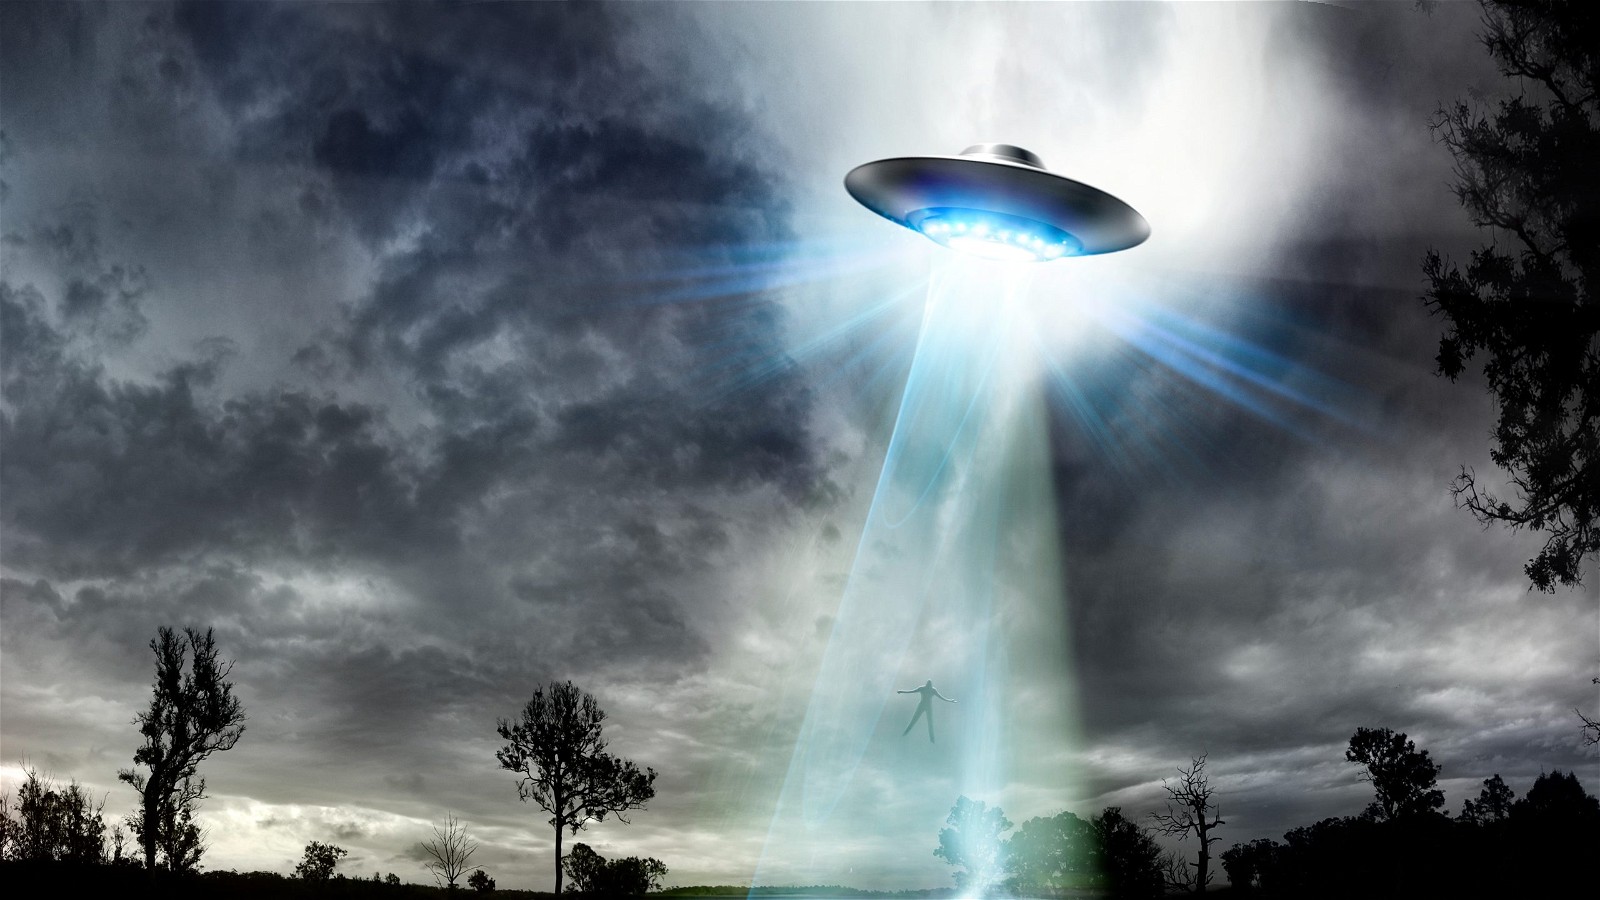 Guillermo del Toro believes he saw a UFO